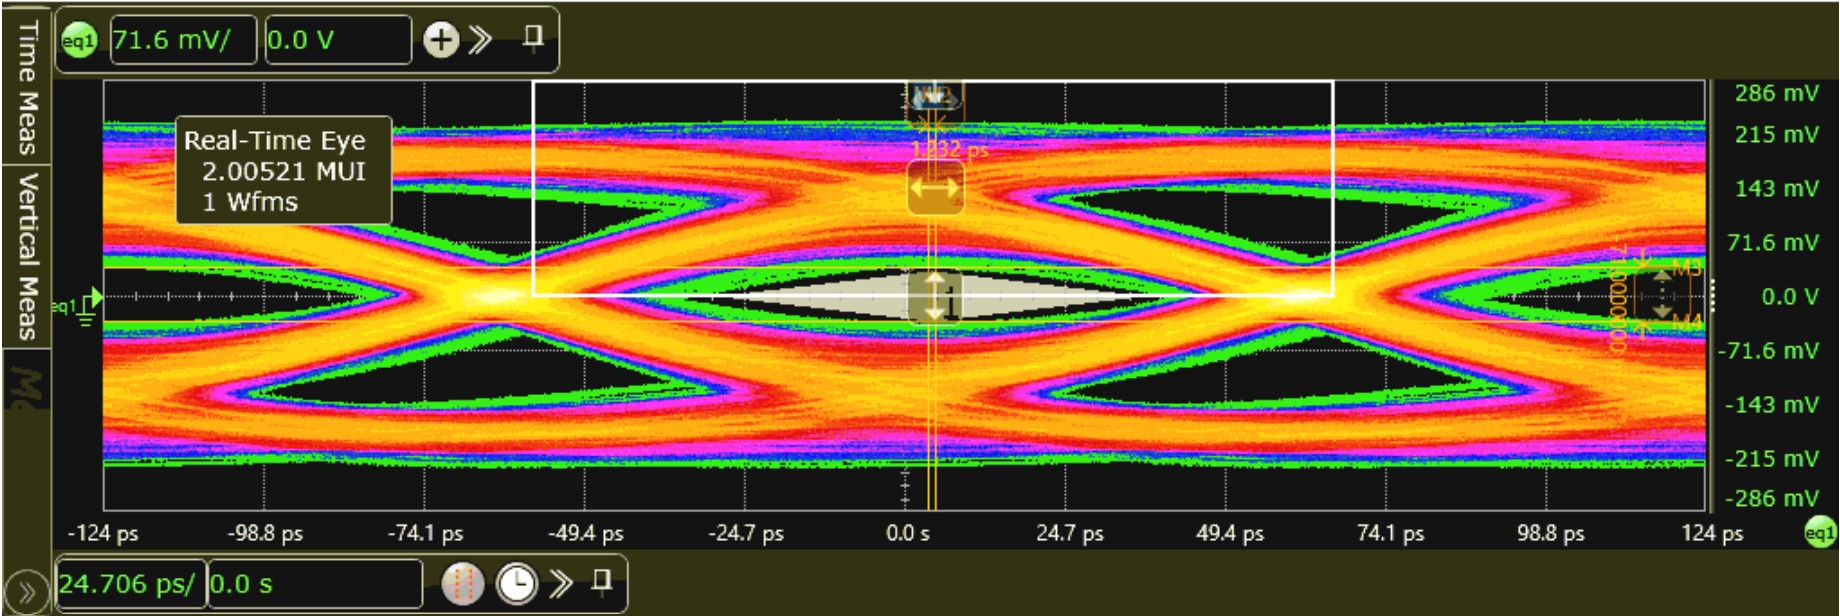  DisplayPort 4.6-Meter System Test Results at 8.1Gbps Lane 1